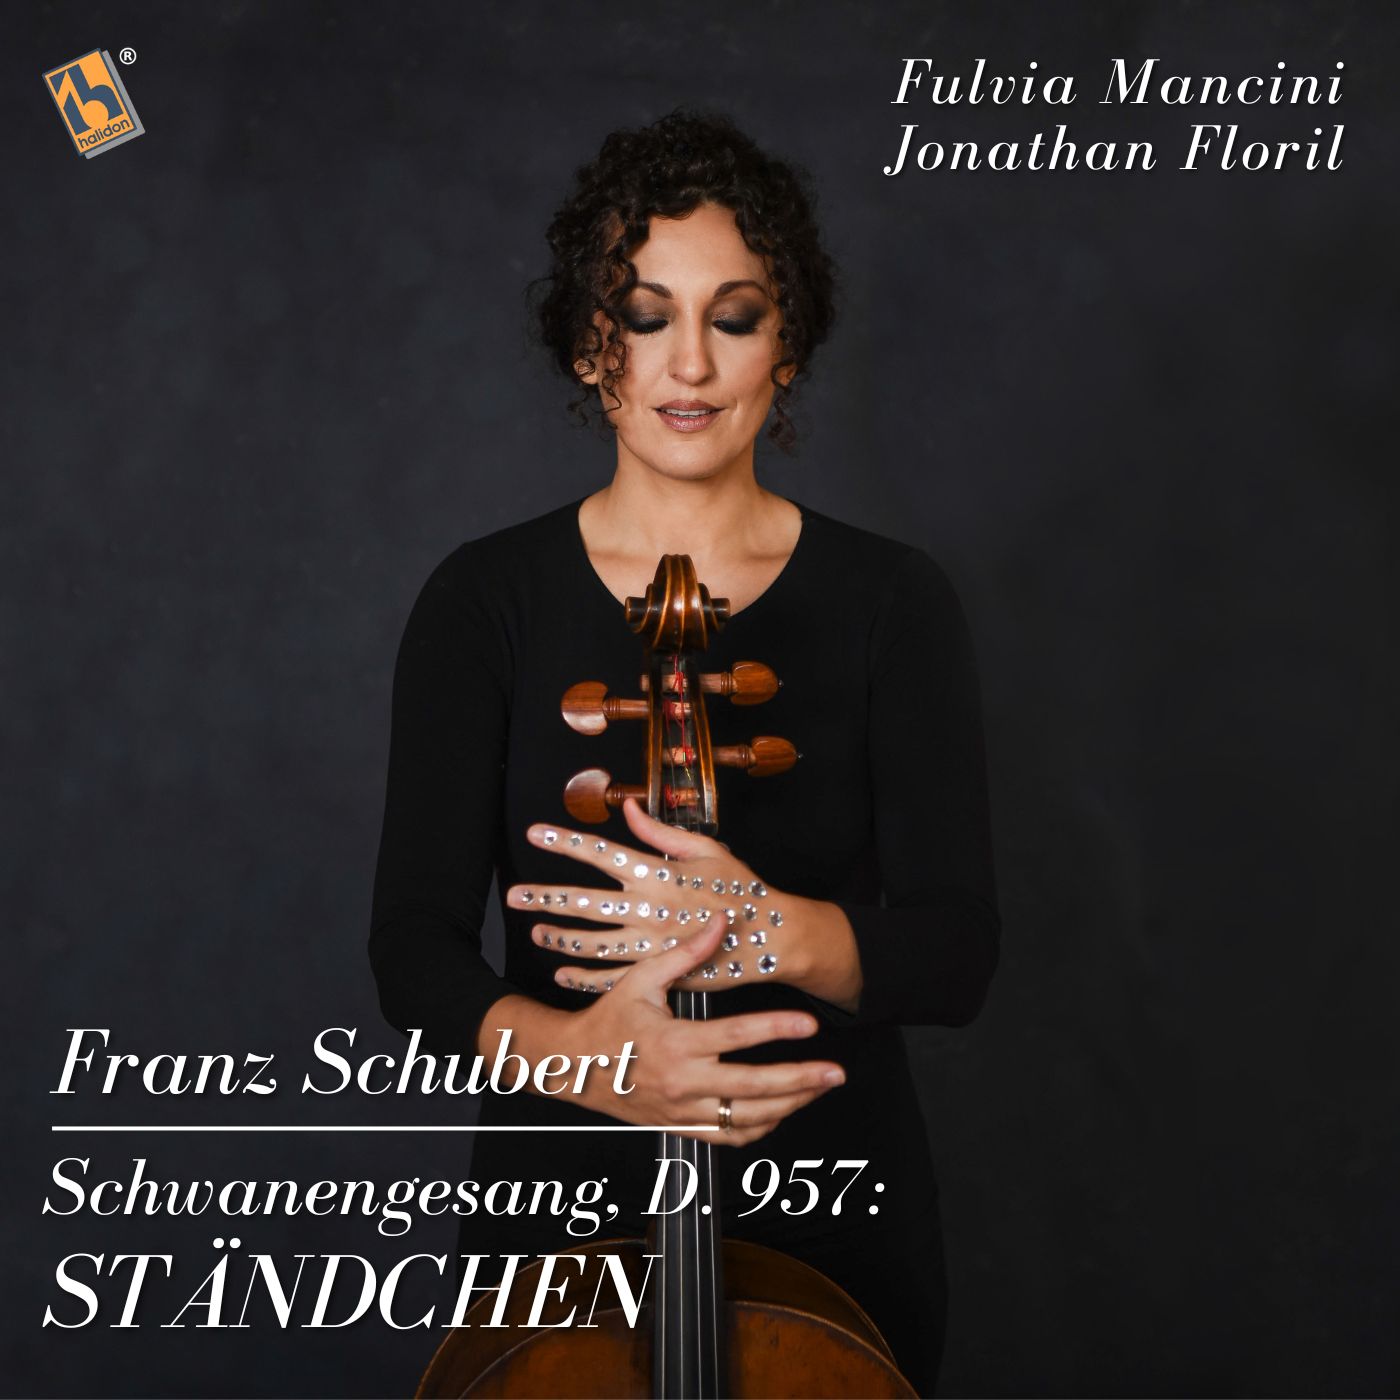 Schubert: Schwanengesang, D. 957: Ständchen (Arr. for Cello and Piano by F. Mancini)